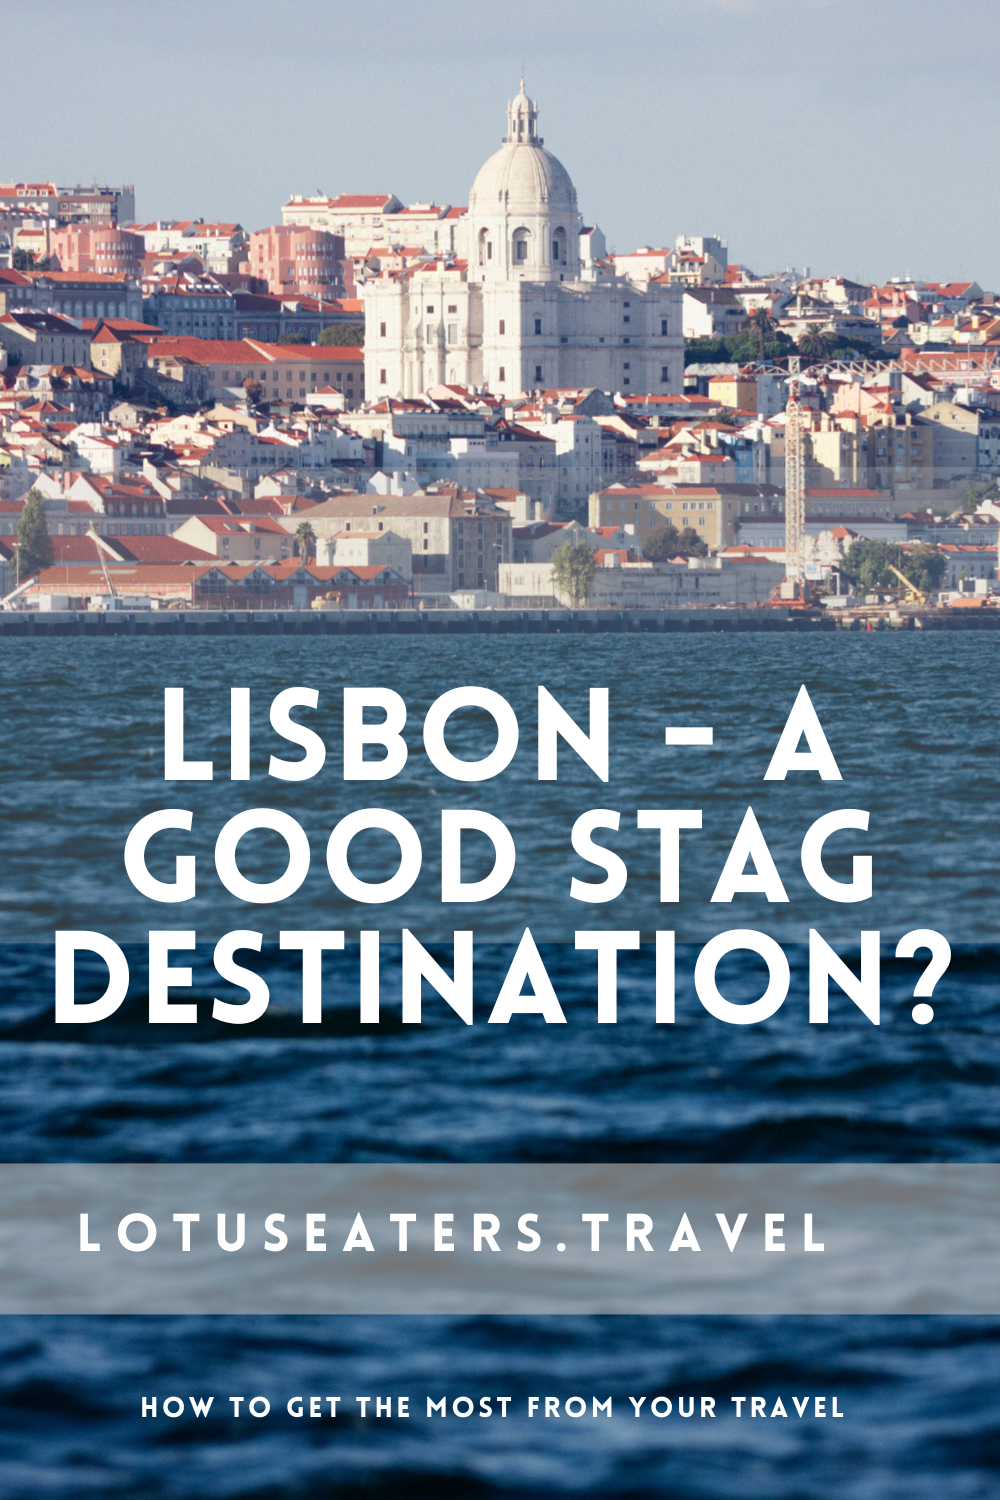 Lisbon – a good stag destination?